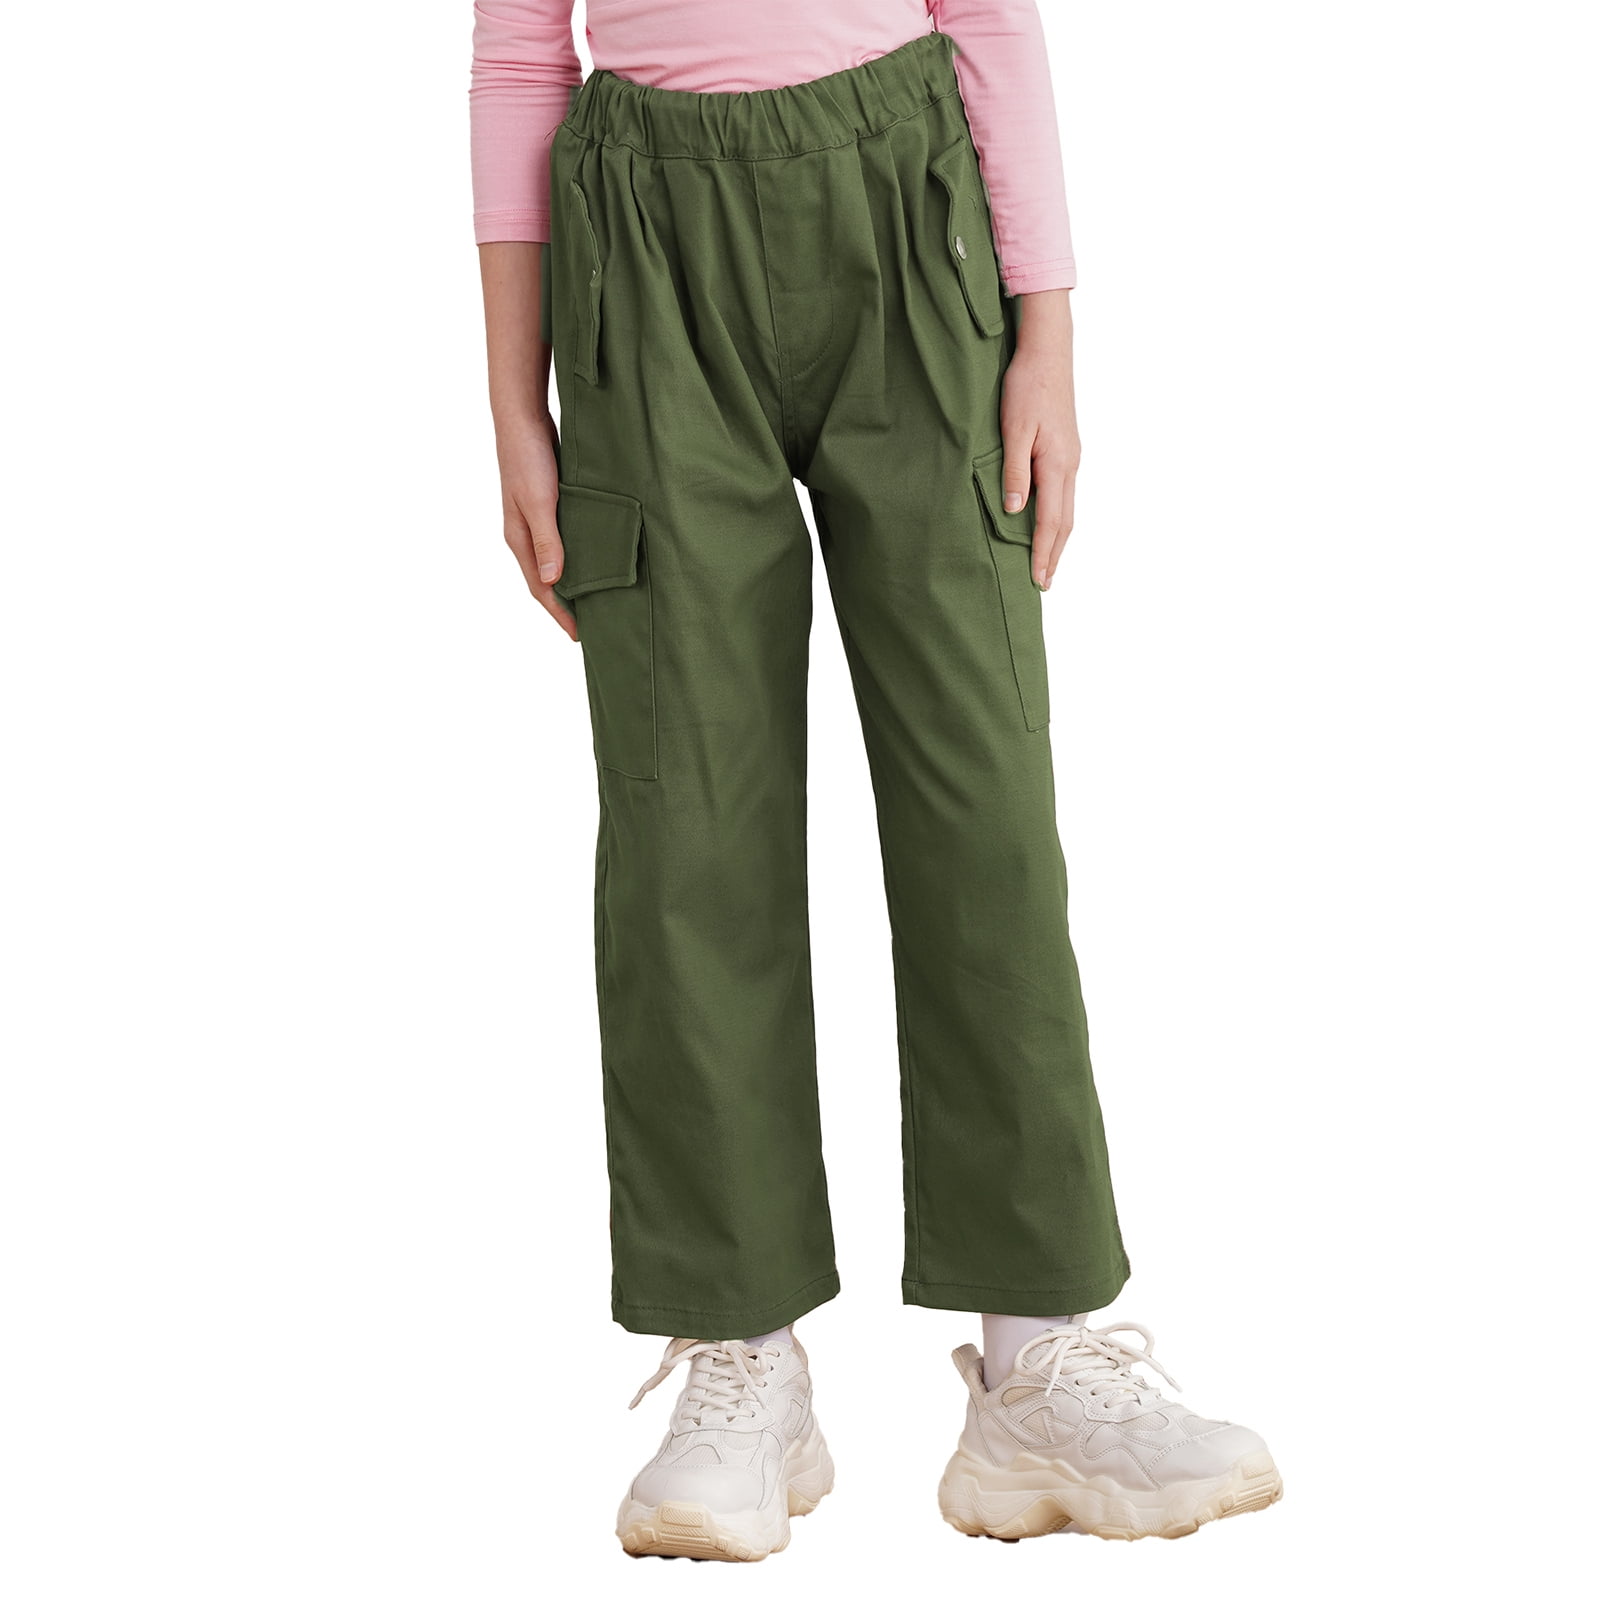 IEFIEL Girls Casual Jogger Cargo Pants Big Pockets Hip Hop Dance Pants  Hiking Climbing Sweatpants,Sizes 6-16 A Green 12